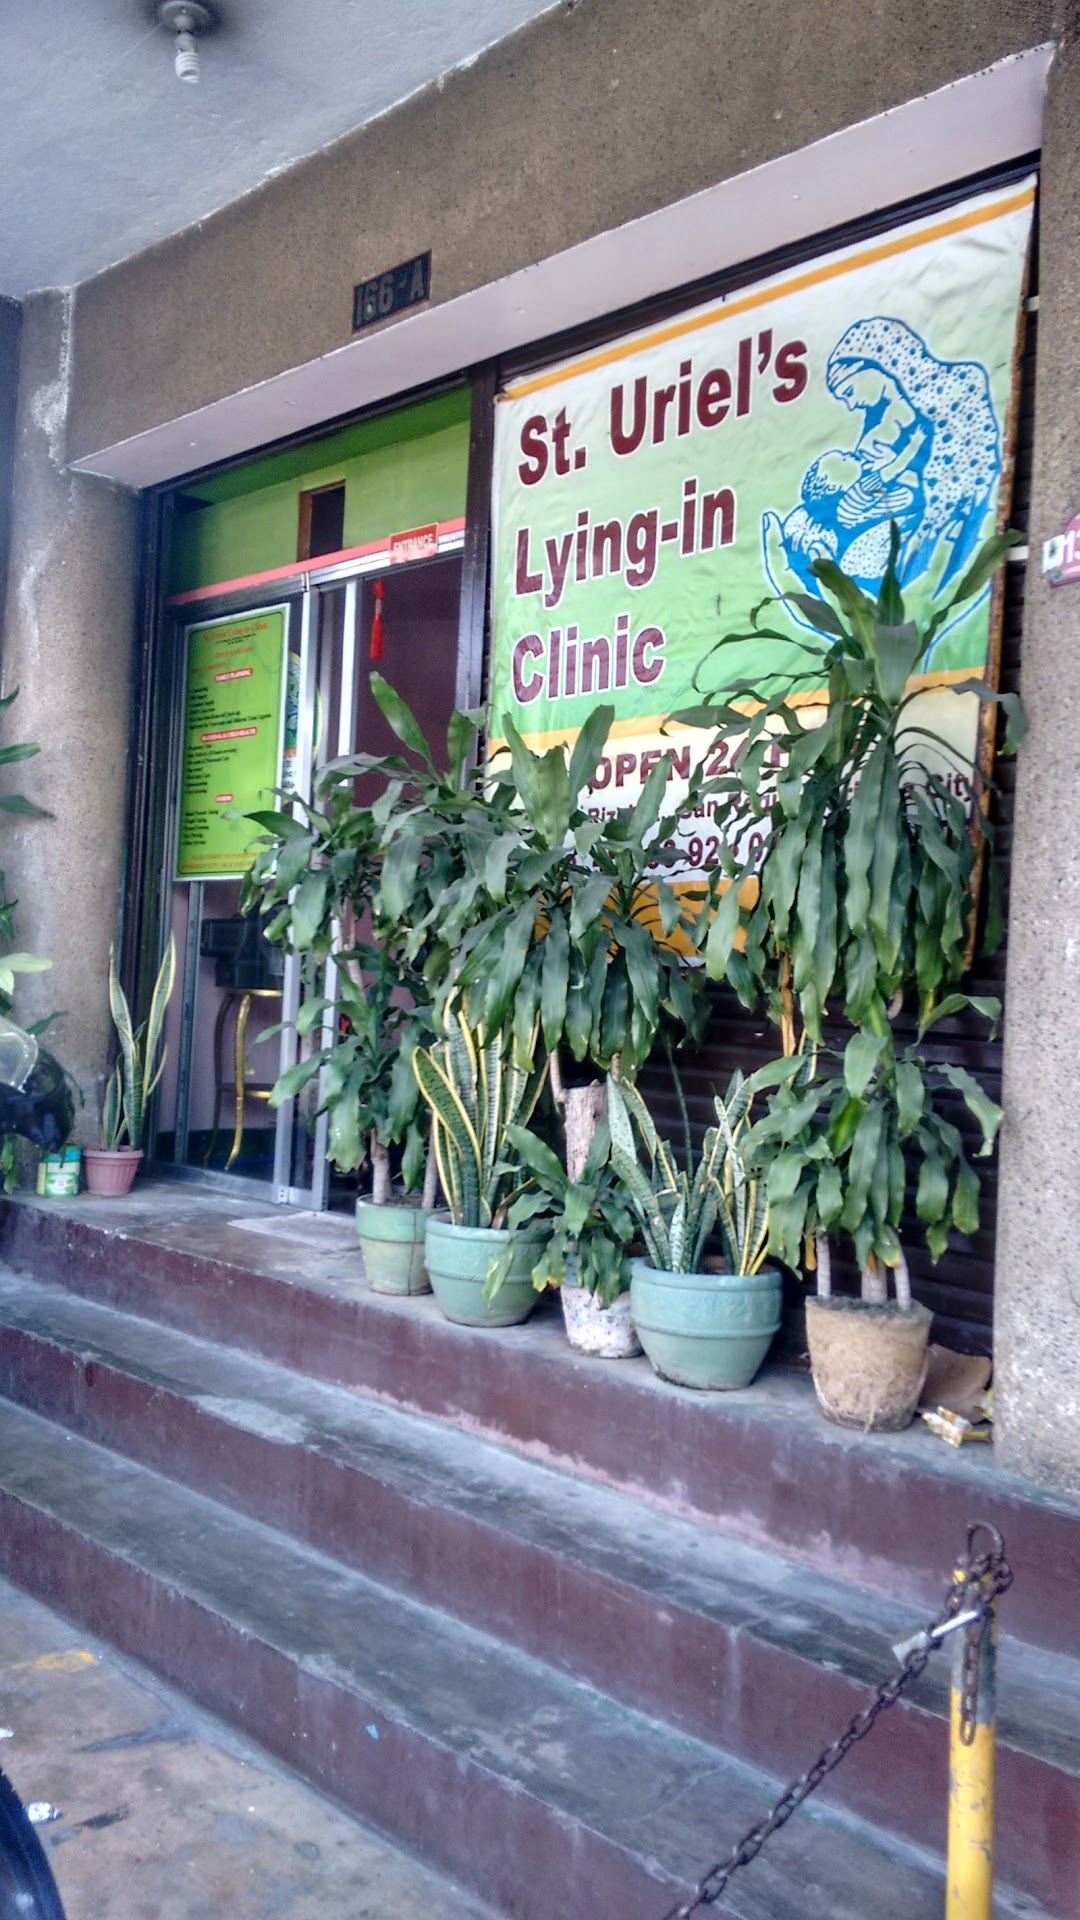 St. Uriels Lying-In Clinic